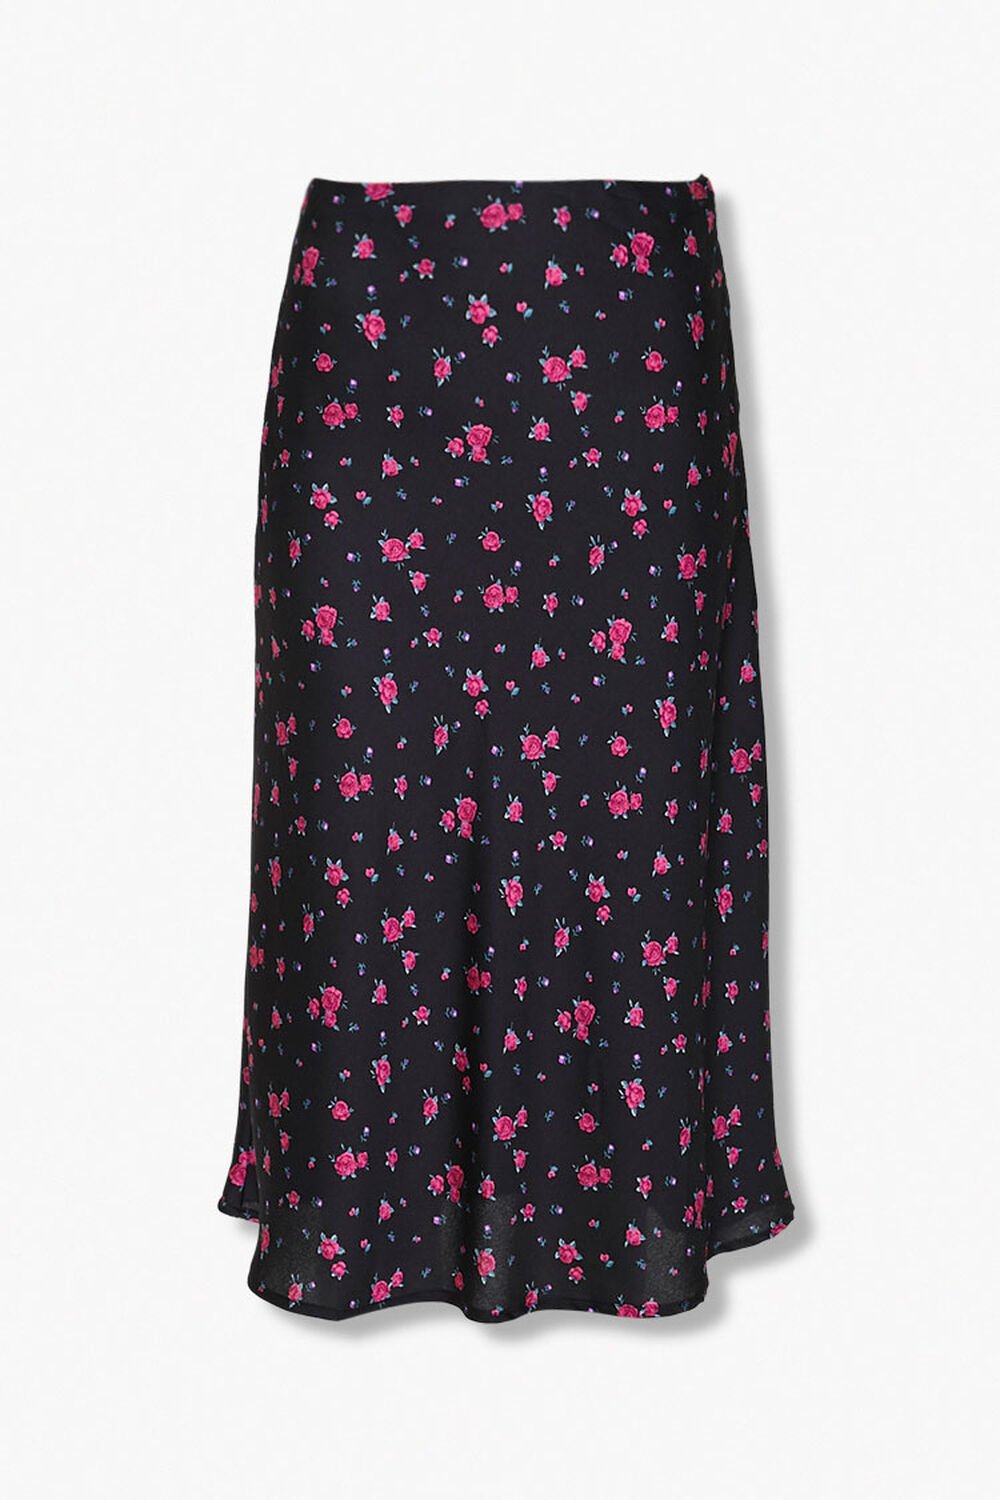 BLACK/MULTI Rose Floral Print Skirt, image 1